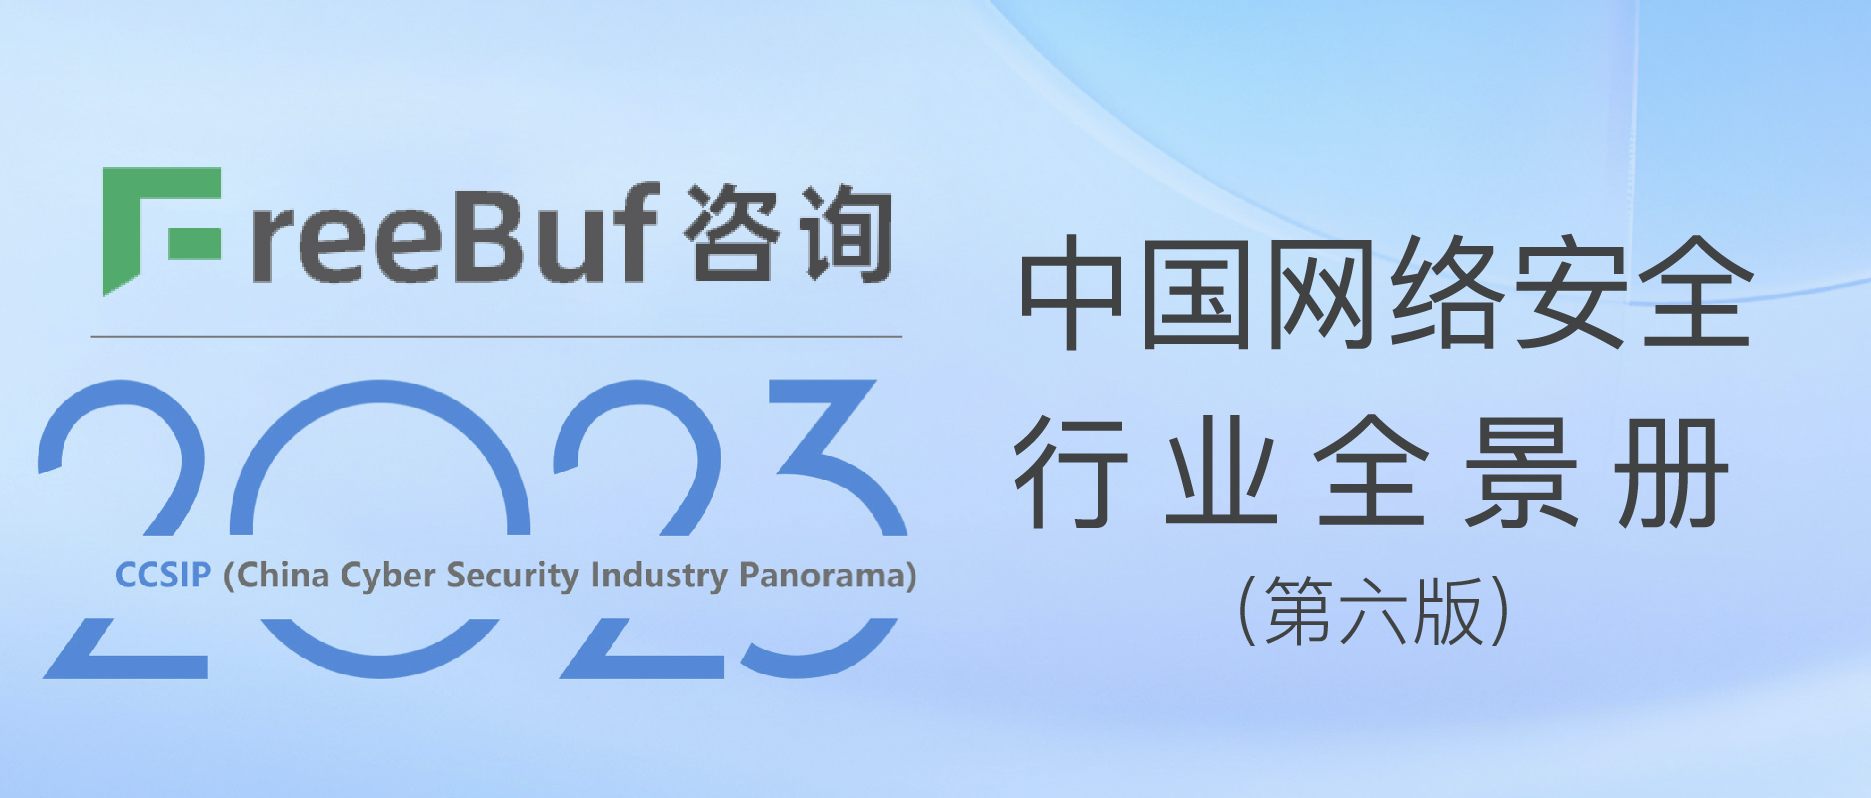 CCSIP 2023中国网络安全行业全景册（第六版）正式发布，上讯信息入选50项细分领域